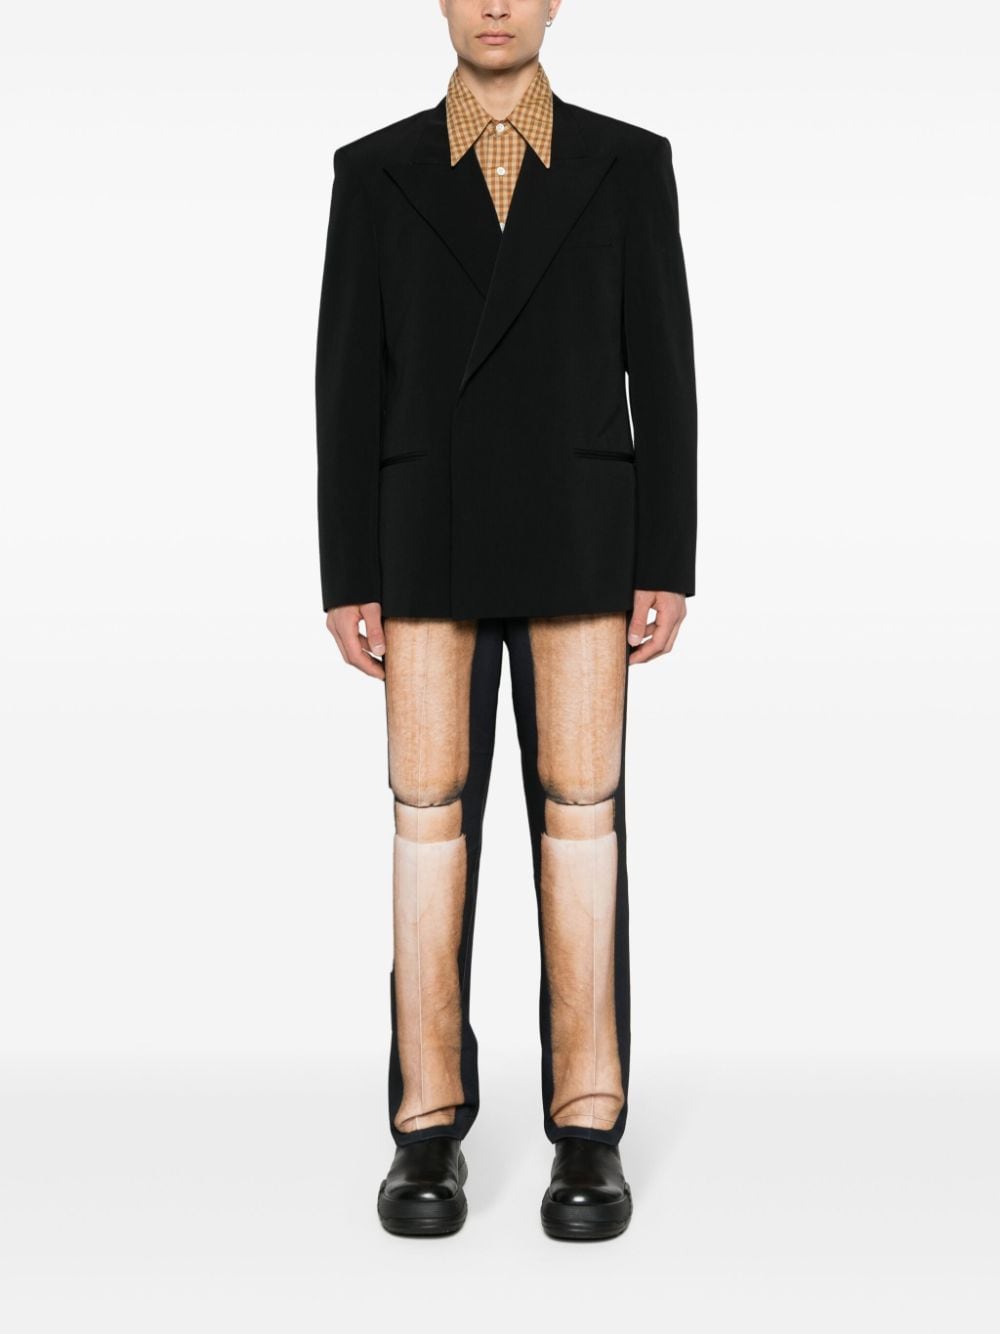 KidSuper Mannequin Suit regular trousers - Zwart